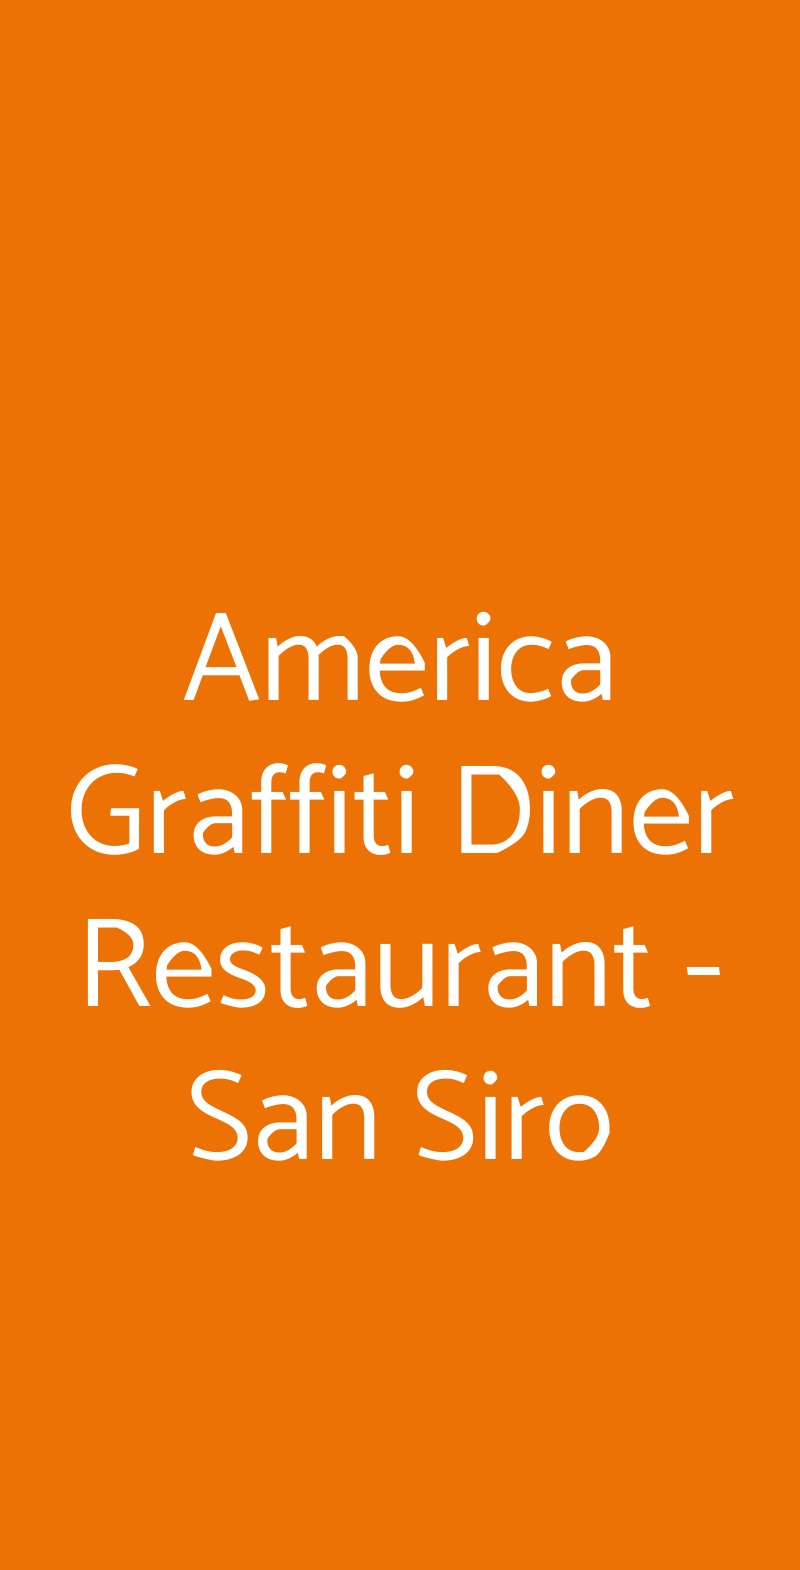 America Graffiti Diner Restaurant - San Siro Milano menù 1 pagina